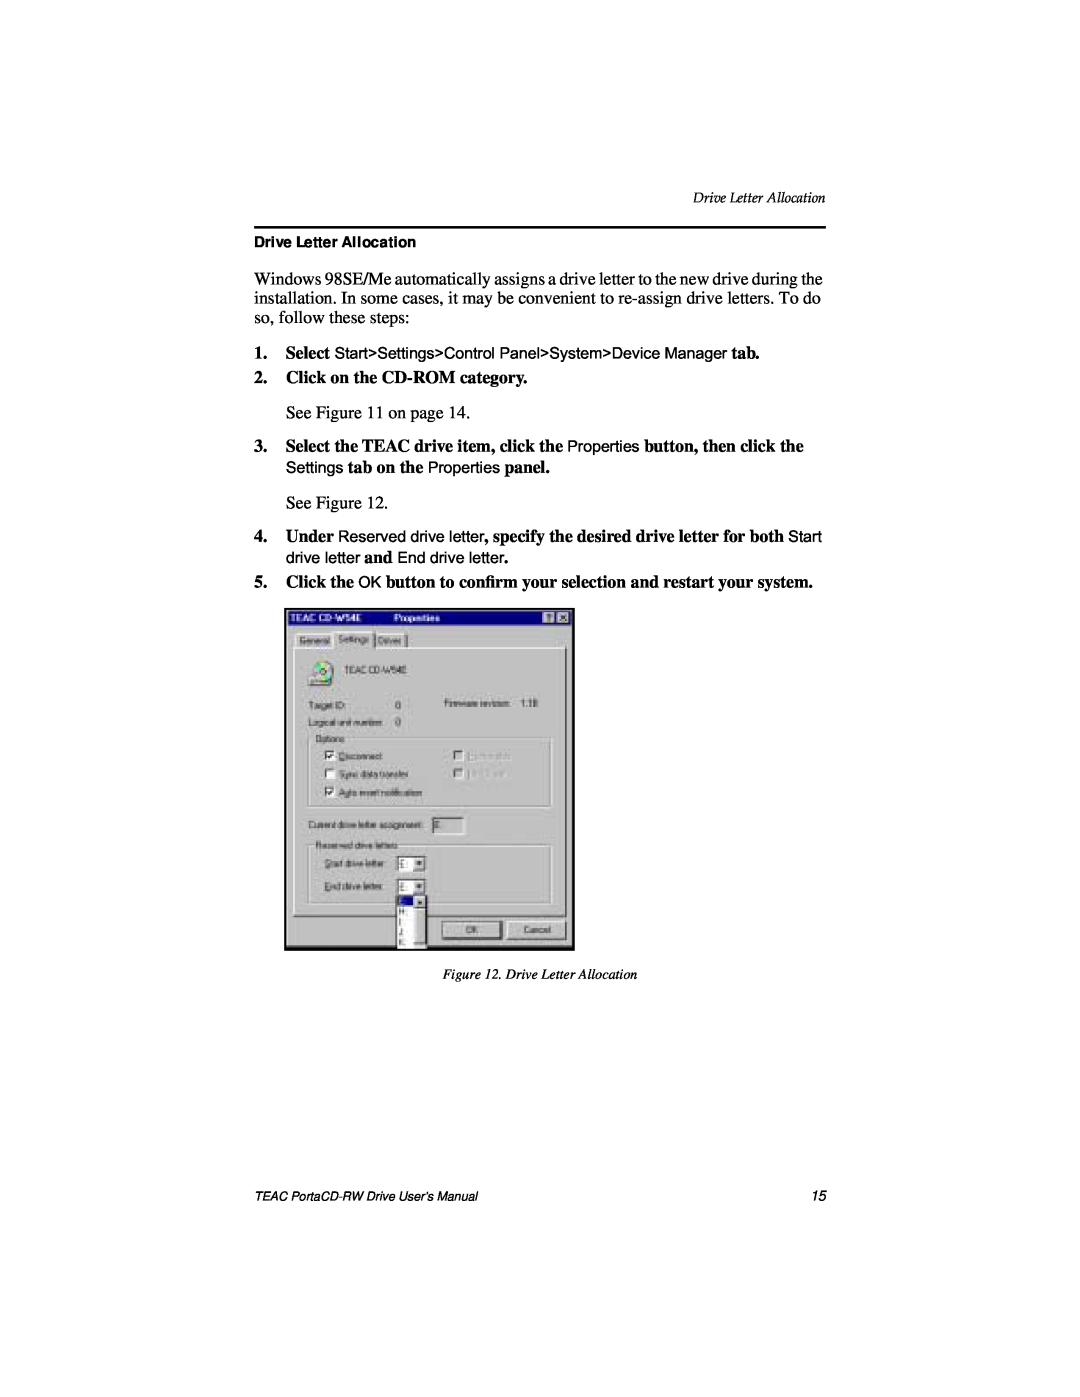 Teac E24E user manual Drive Letter Allocation, See Figure 